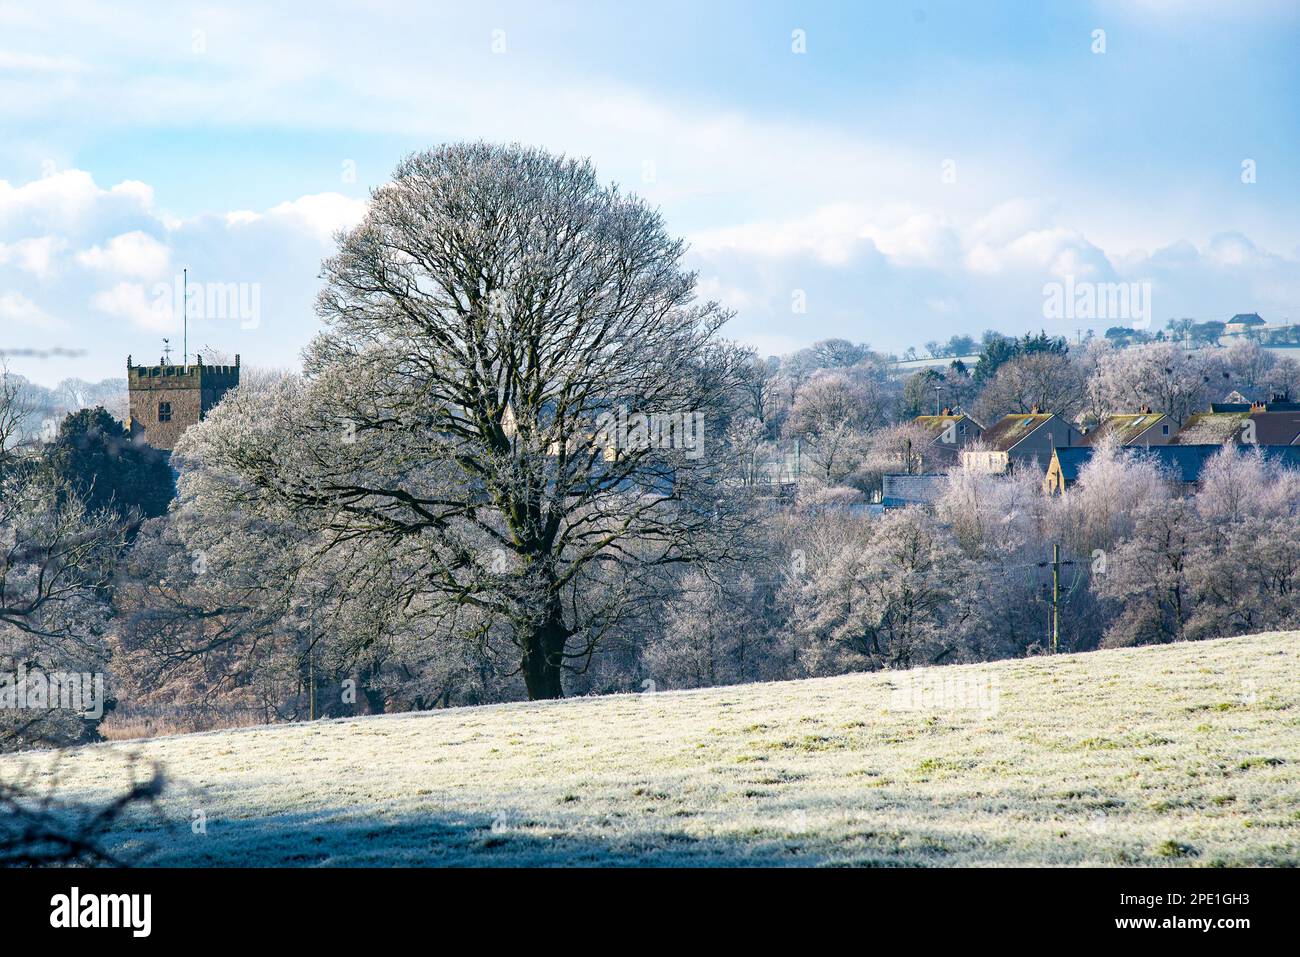 A Frosty Morning, Chipping, Preston, Lancashire, UK Stockfoto